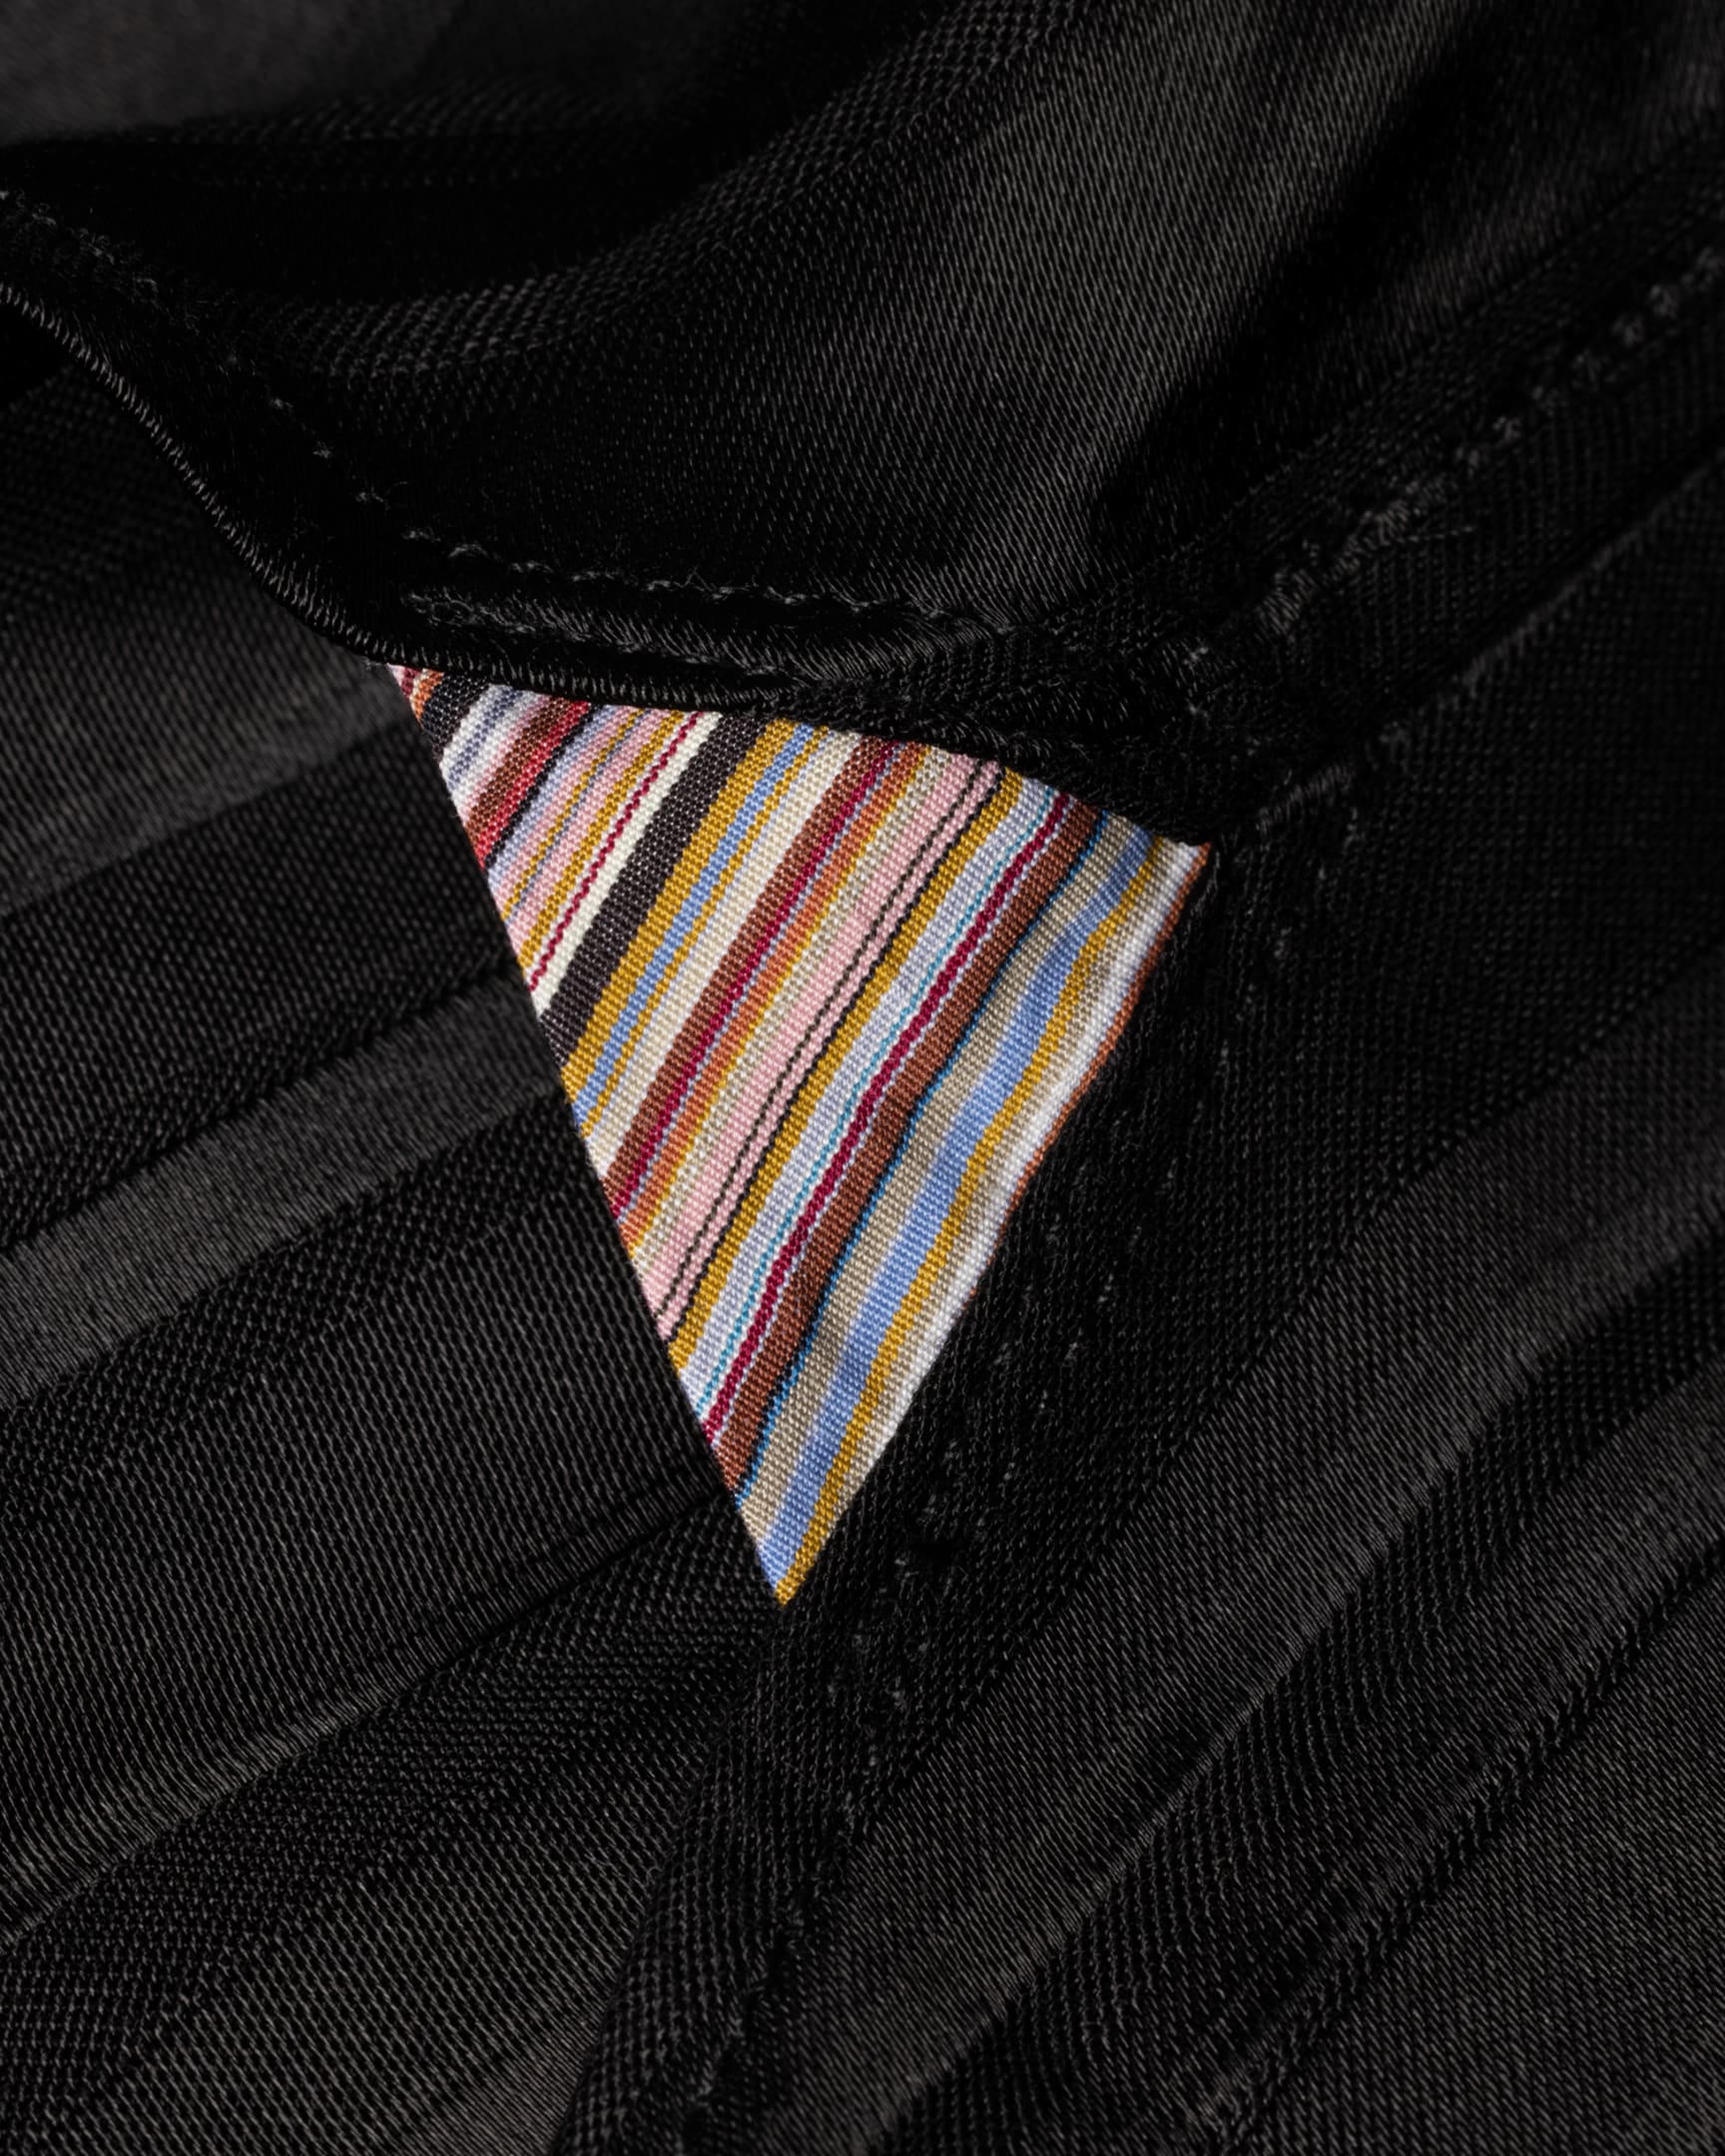 Detail View - Women's Black 'Shadow Stripe' Shirt Paul Smith